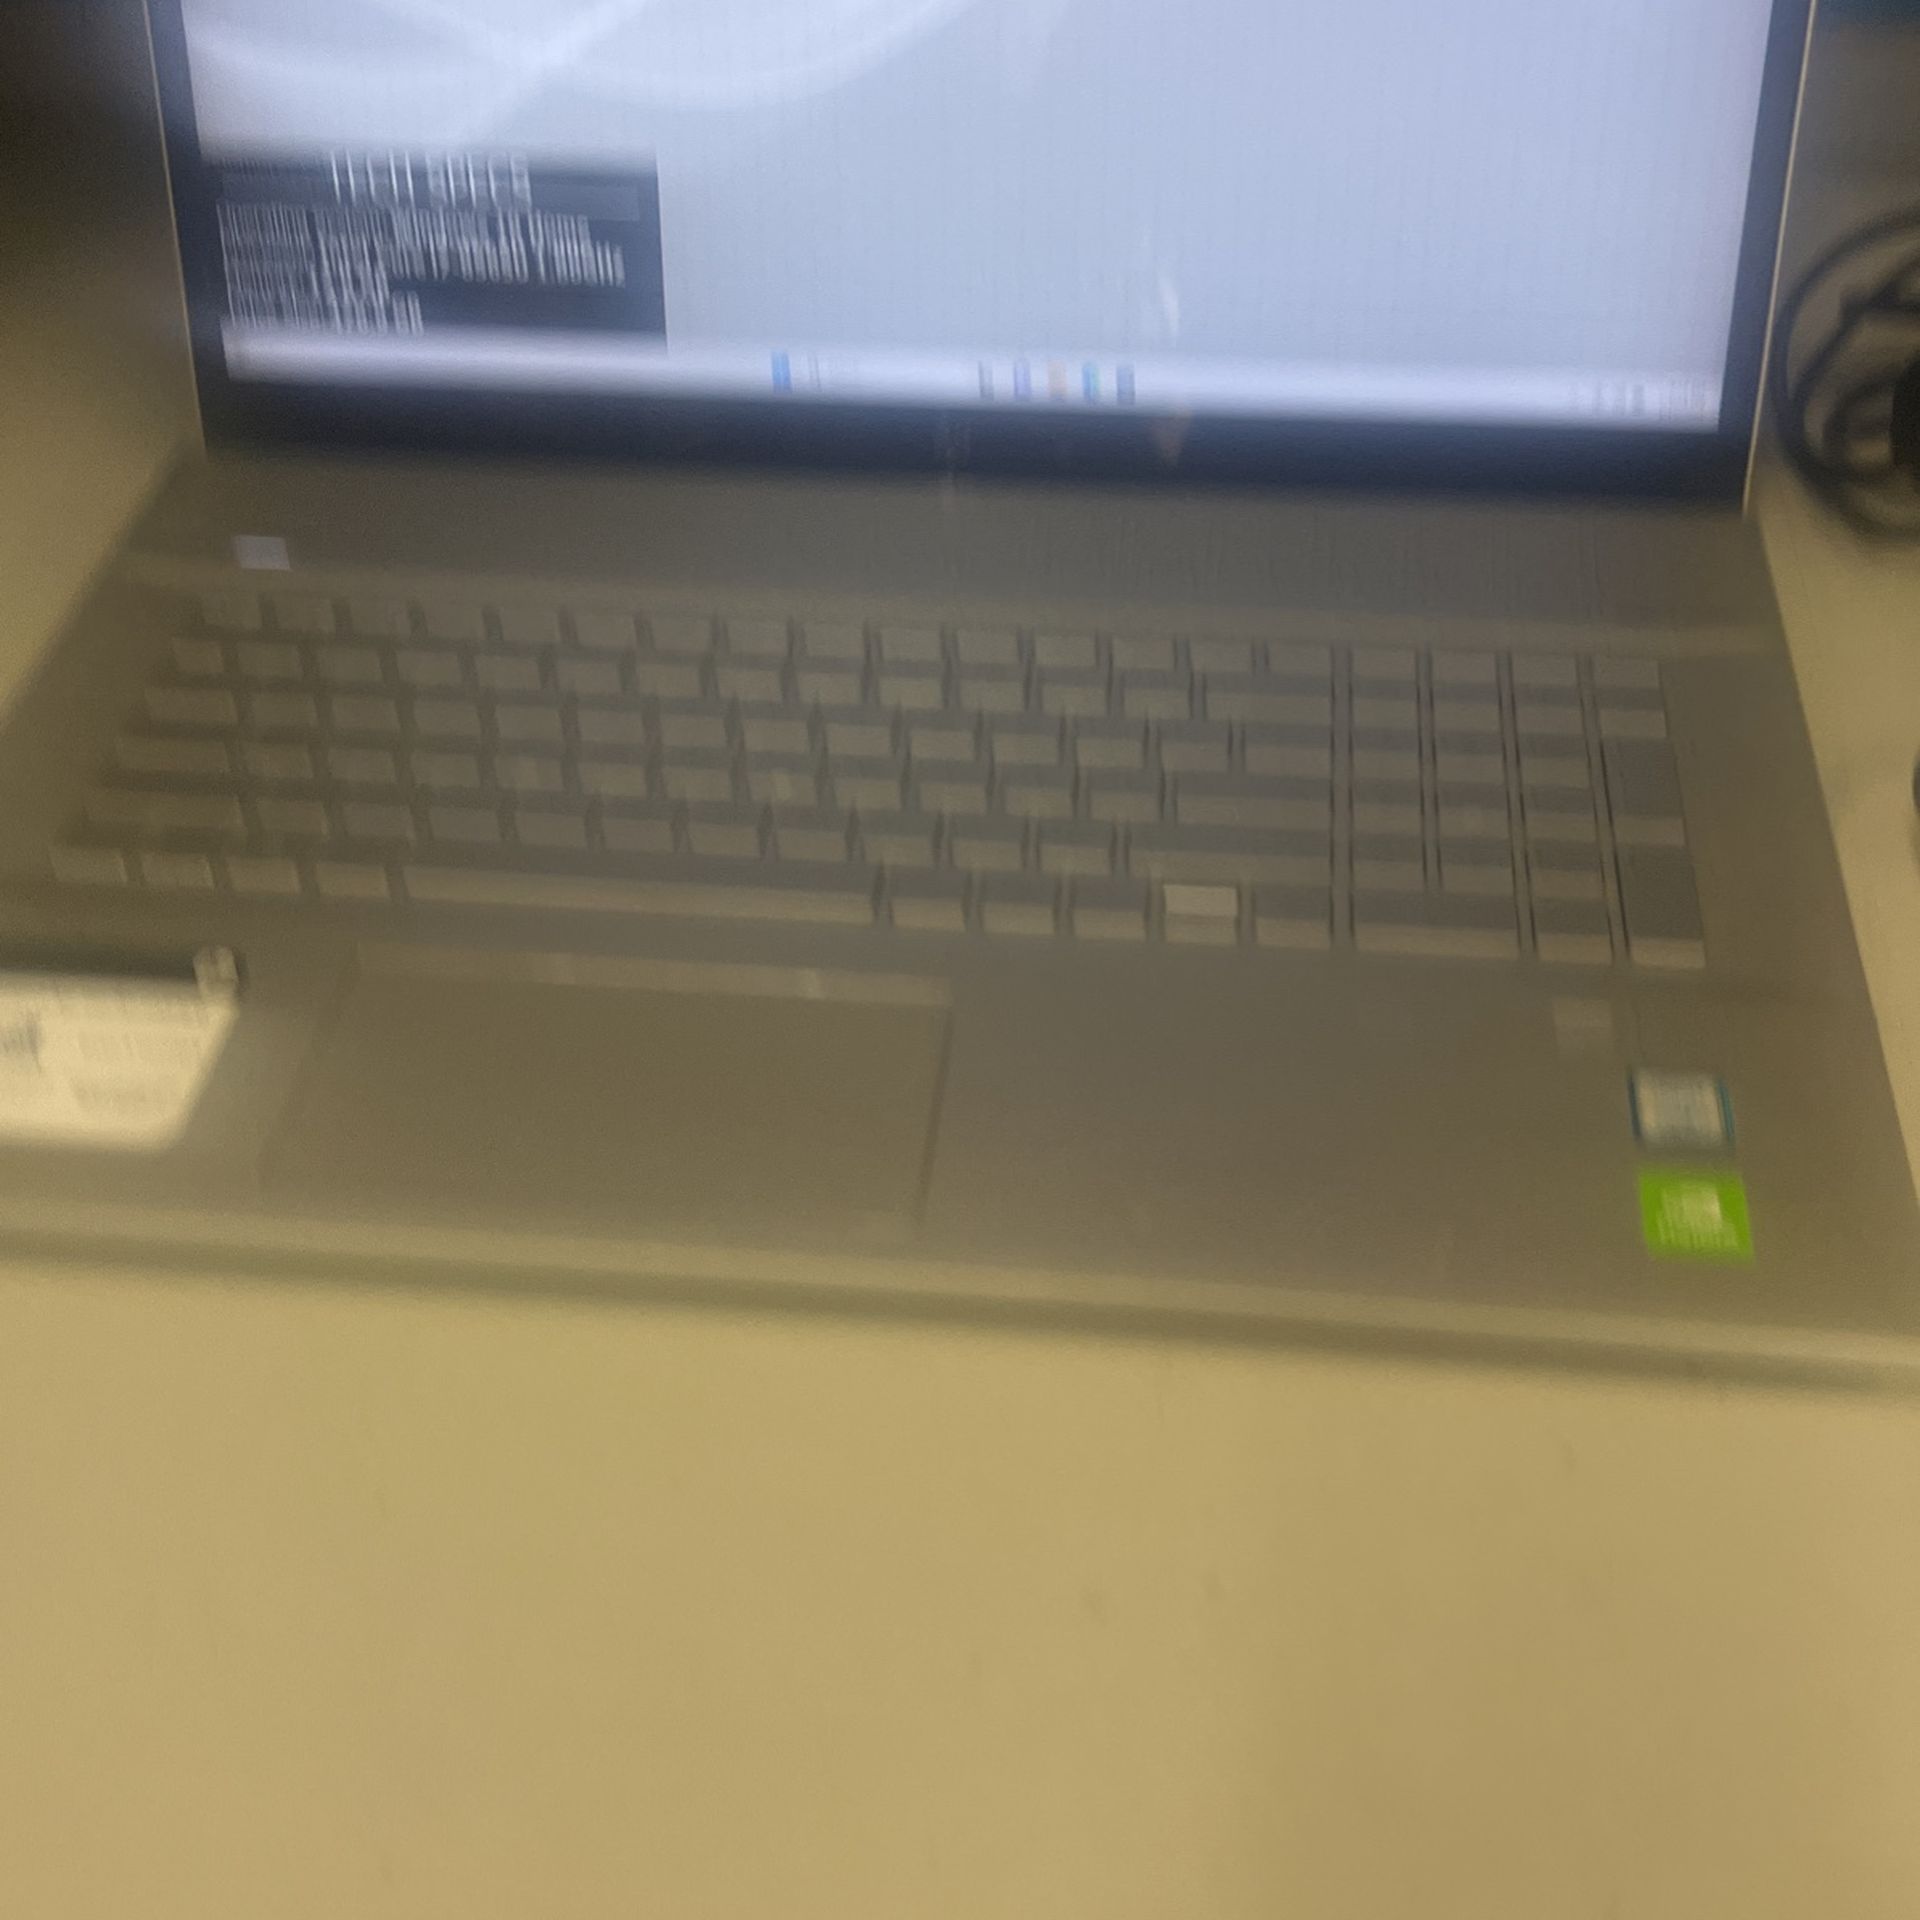 HP ENVY Touch Screen Laptop